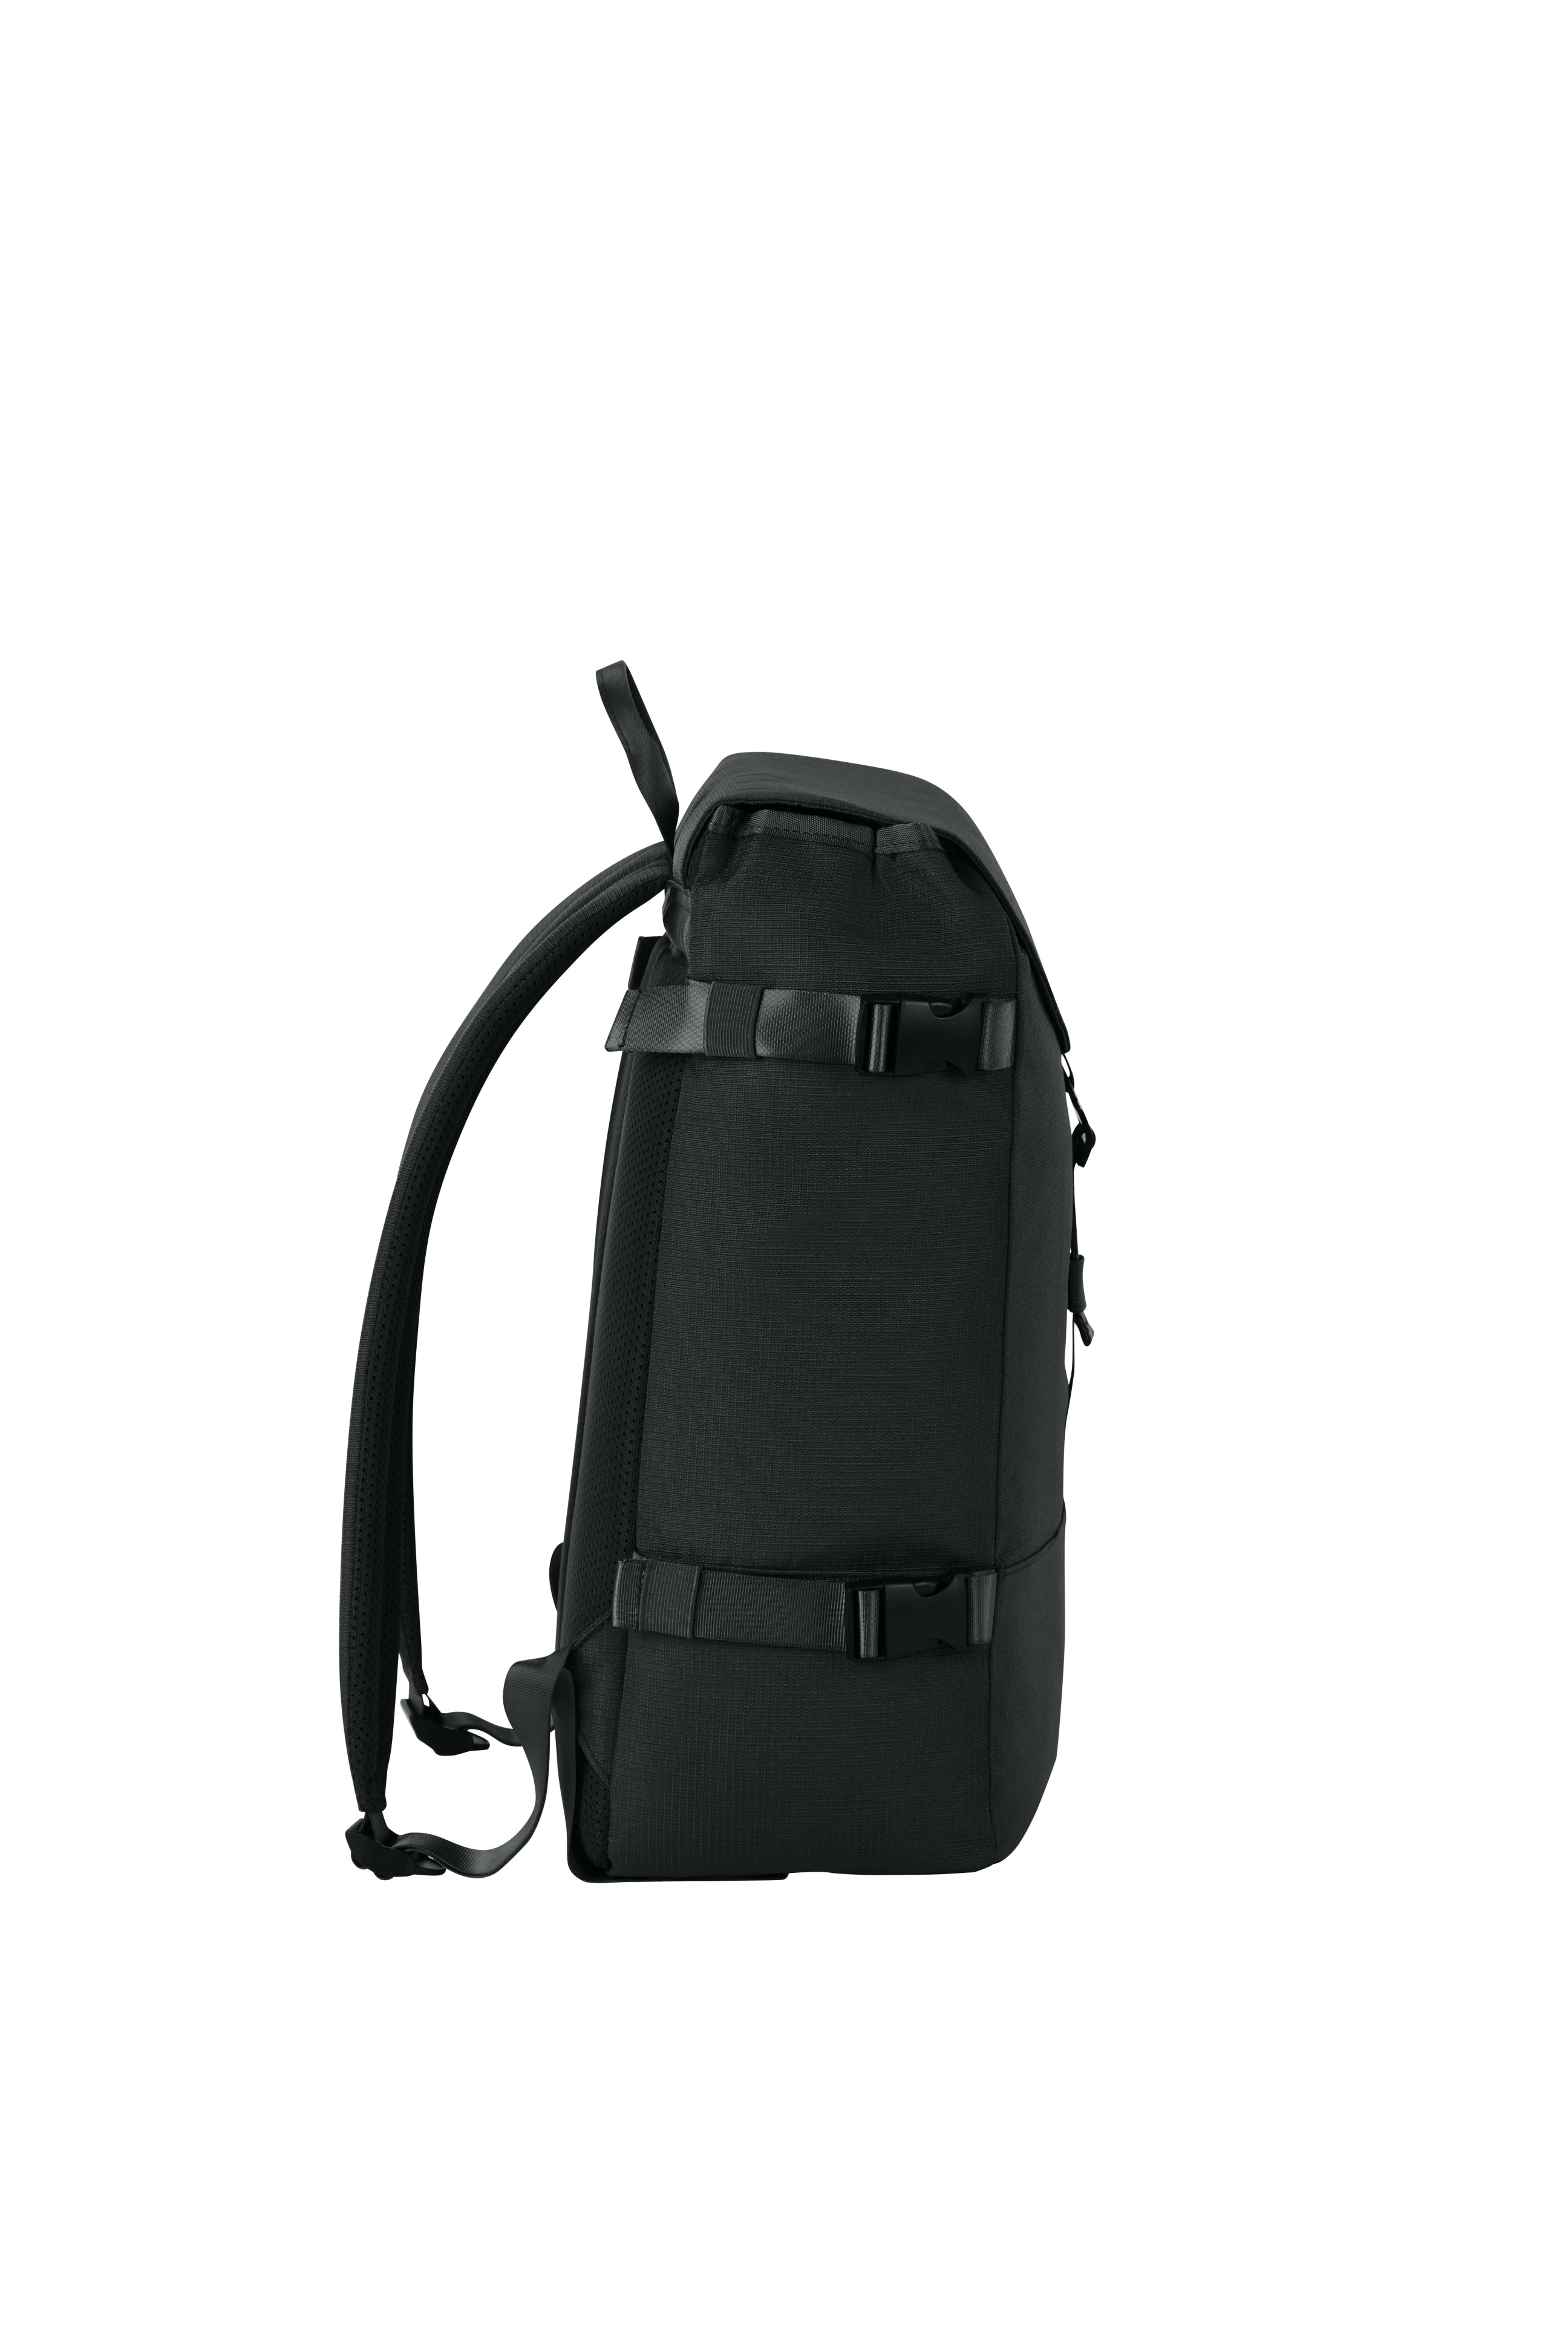 High Sierra - Camille 20L 15.6in Laptop backpack - Black-5